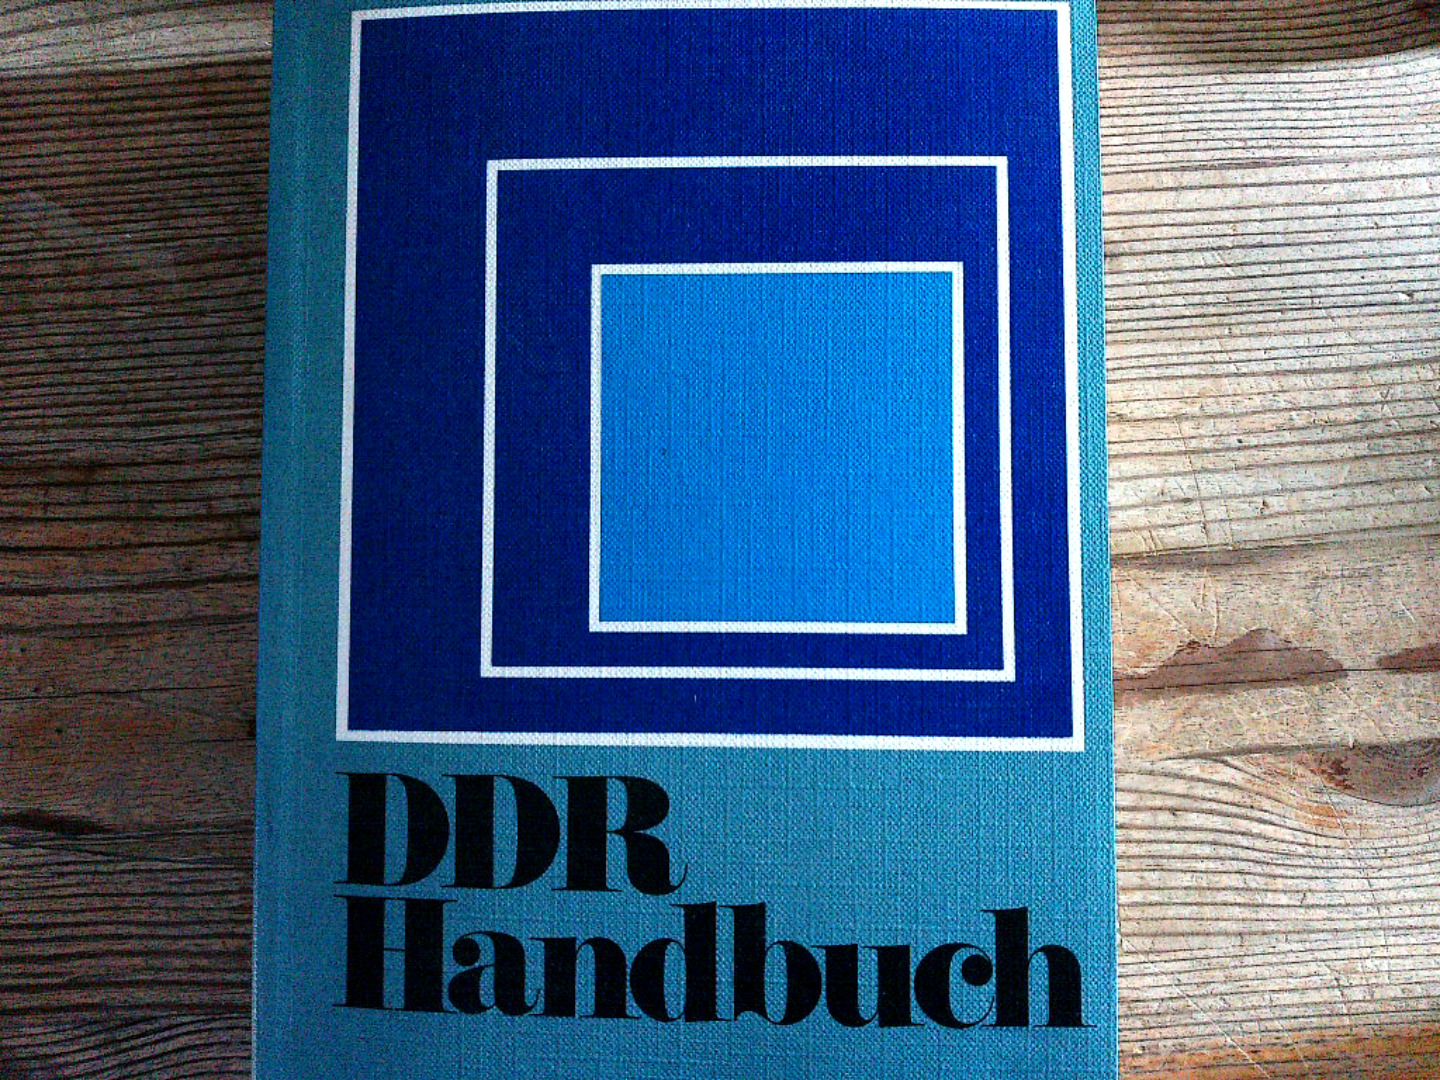 DDR Handbuch. (ISBN 9788870734591)